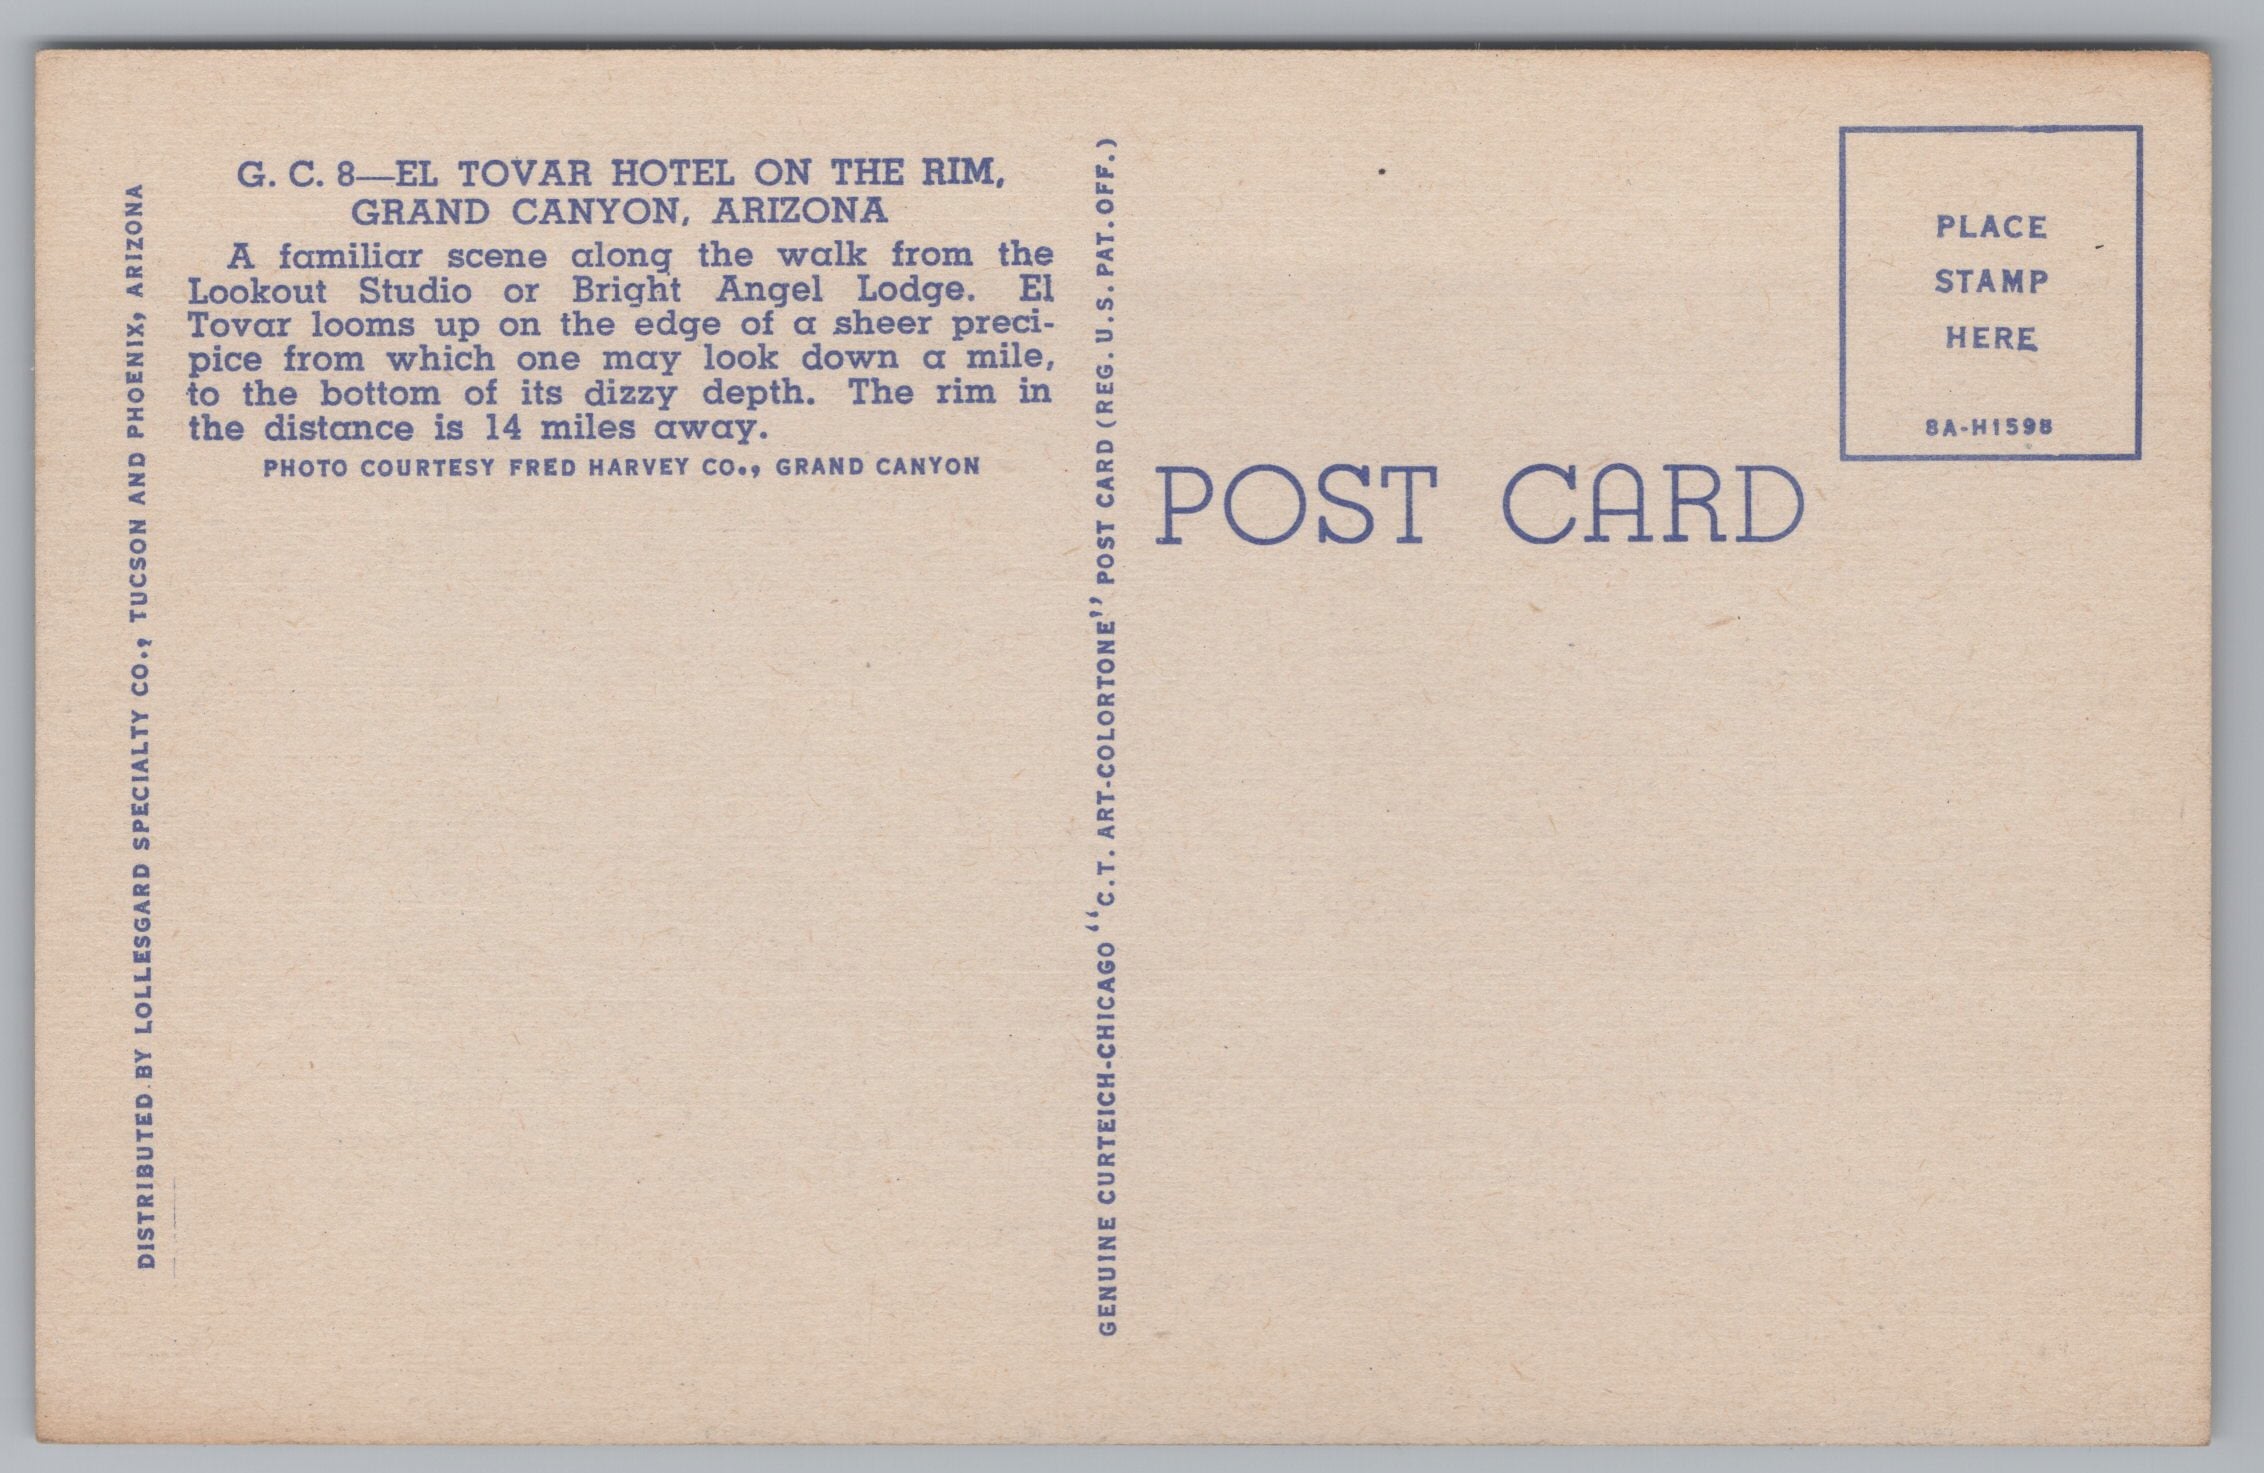 El Tovar Hotel On The Rim, Grand Canyon, Arizona, Vintage Post Card.